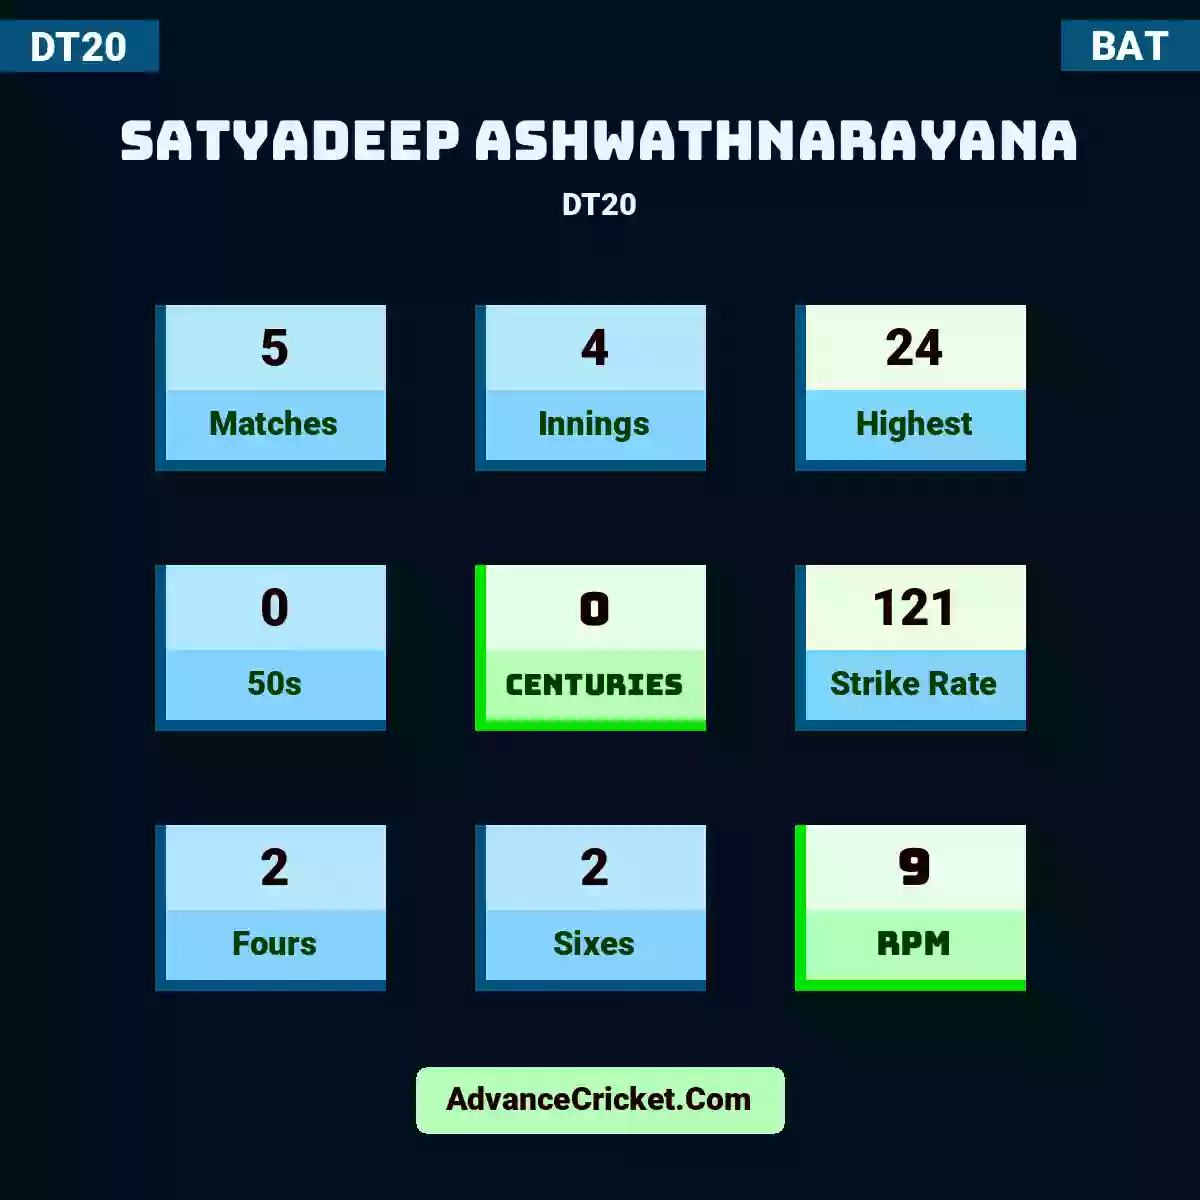 Satyadeep Ashwathnarayana DT20 , Satyadeep Ashwathnarayana played 5 matches, scored 24 runs as highest, 0 half-centuries, and 0 centuries, with a strike rate of 121. S.Ashwathnarayana hit 2 fours and 2 sixes, with an RPM of 9.